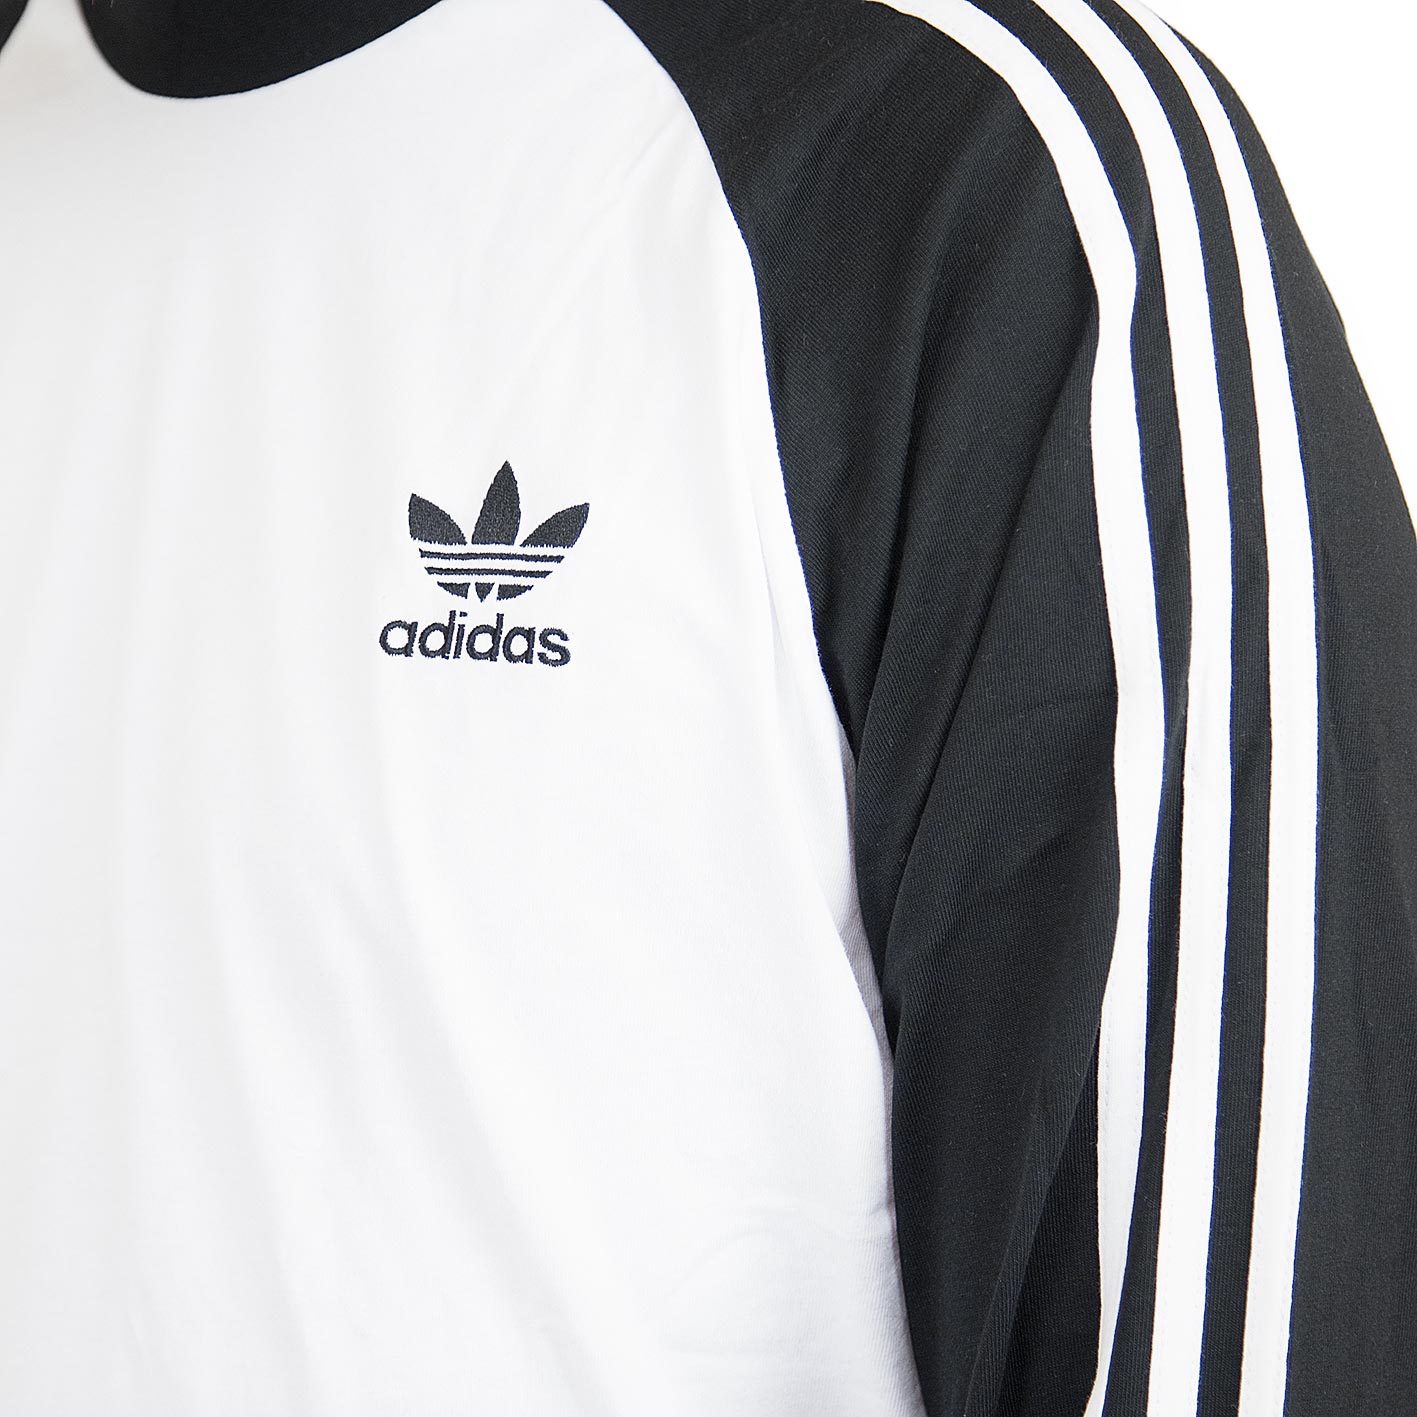 ☆ Adidas Originals Longsleeve 3-Stripes weiß/schwarz - hier bestellen!